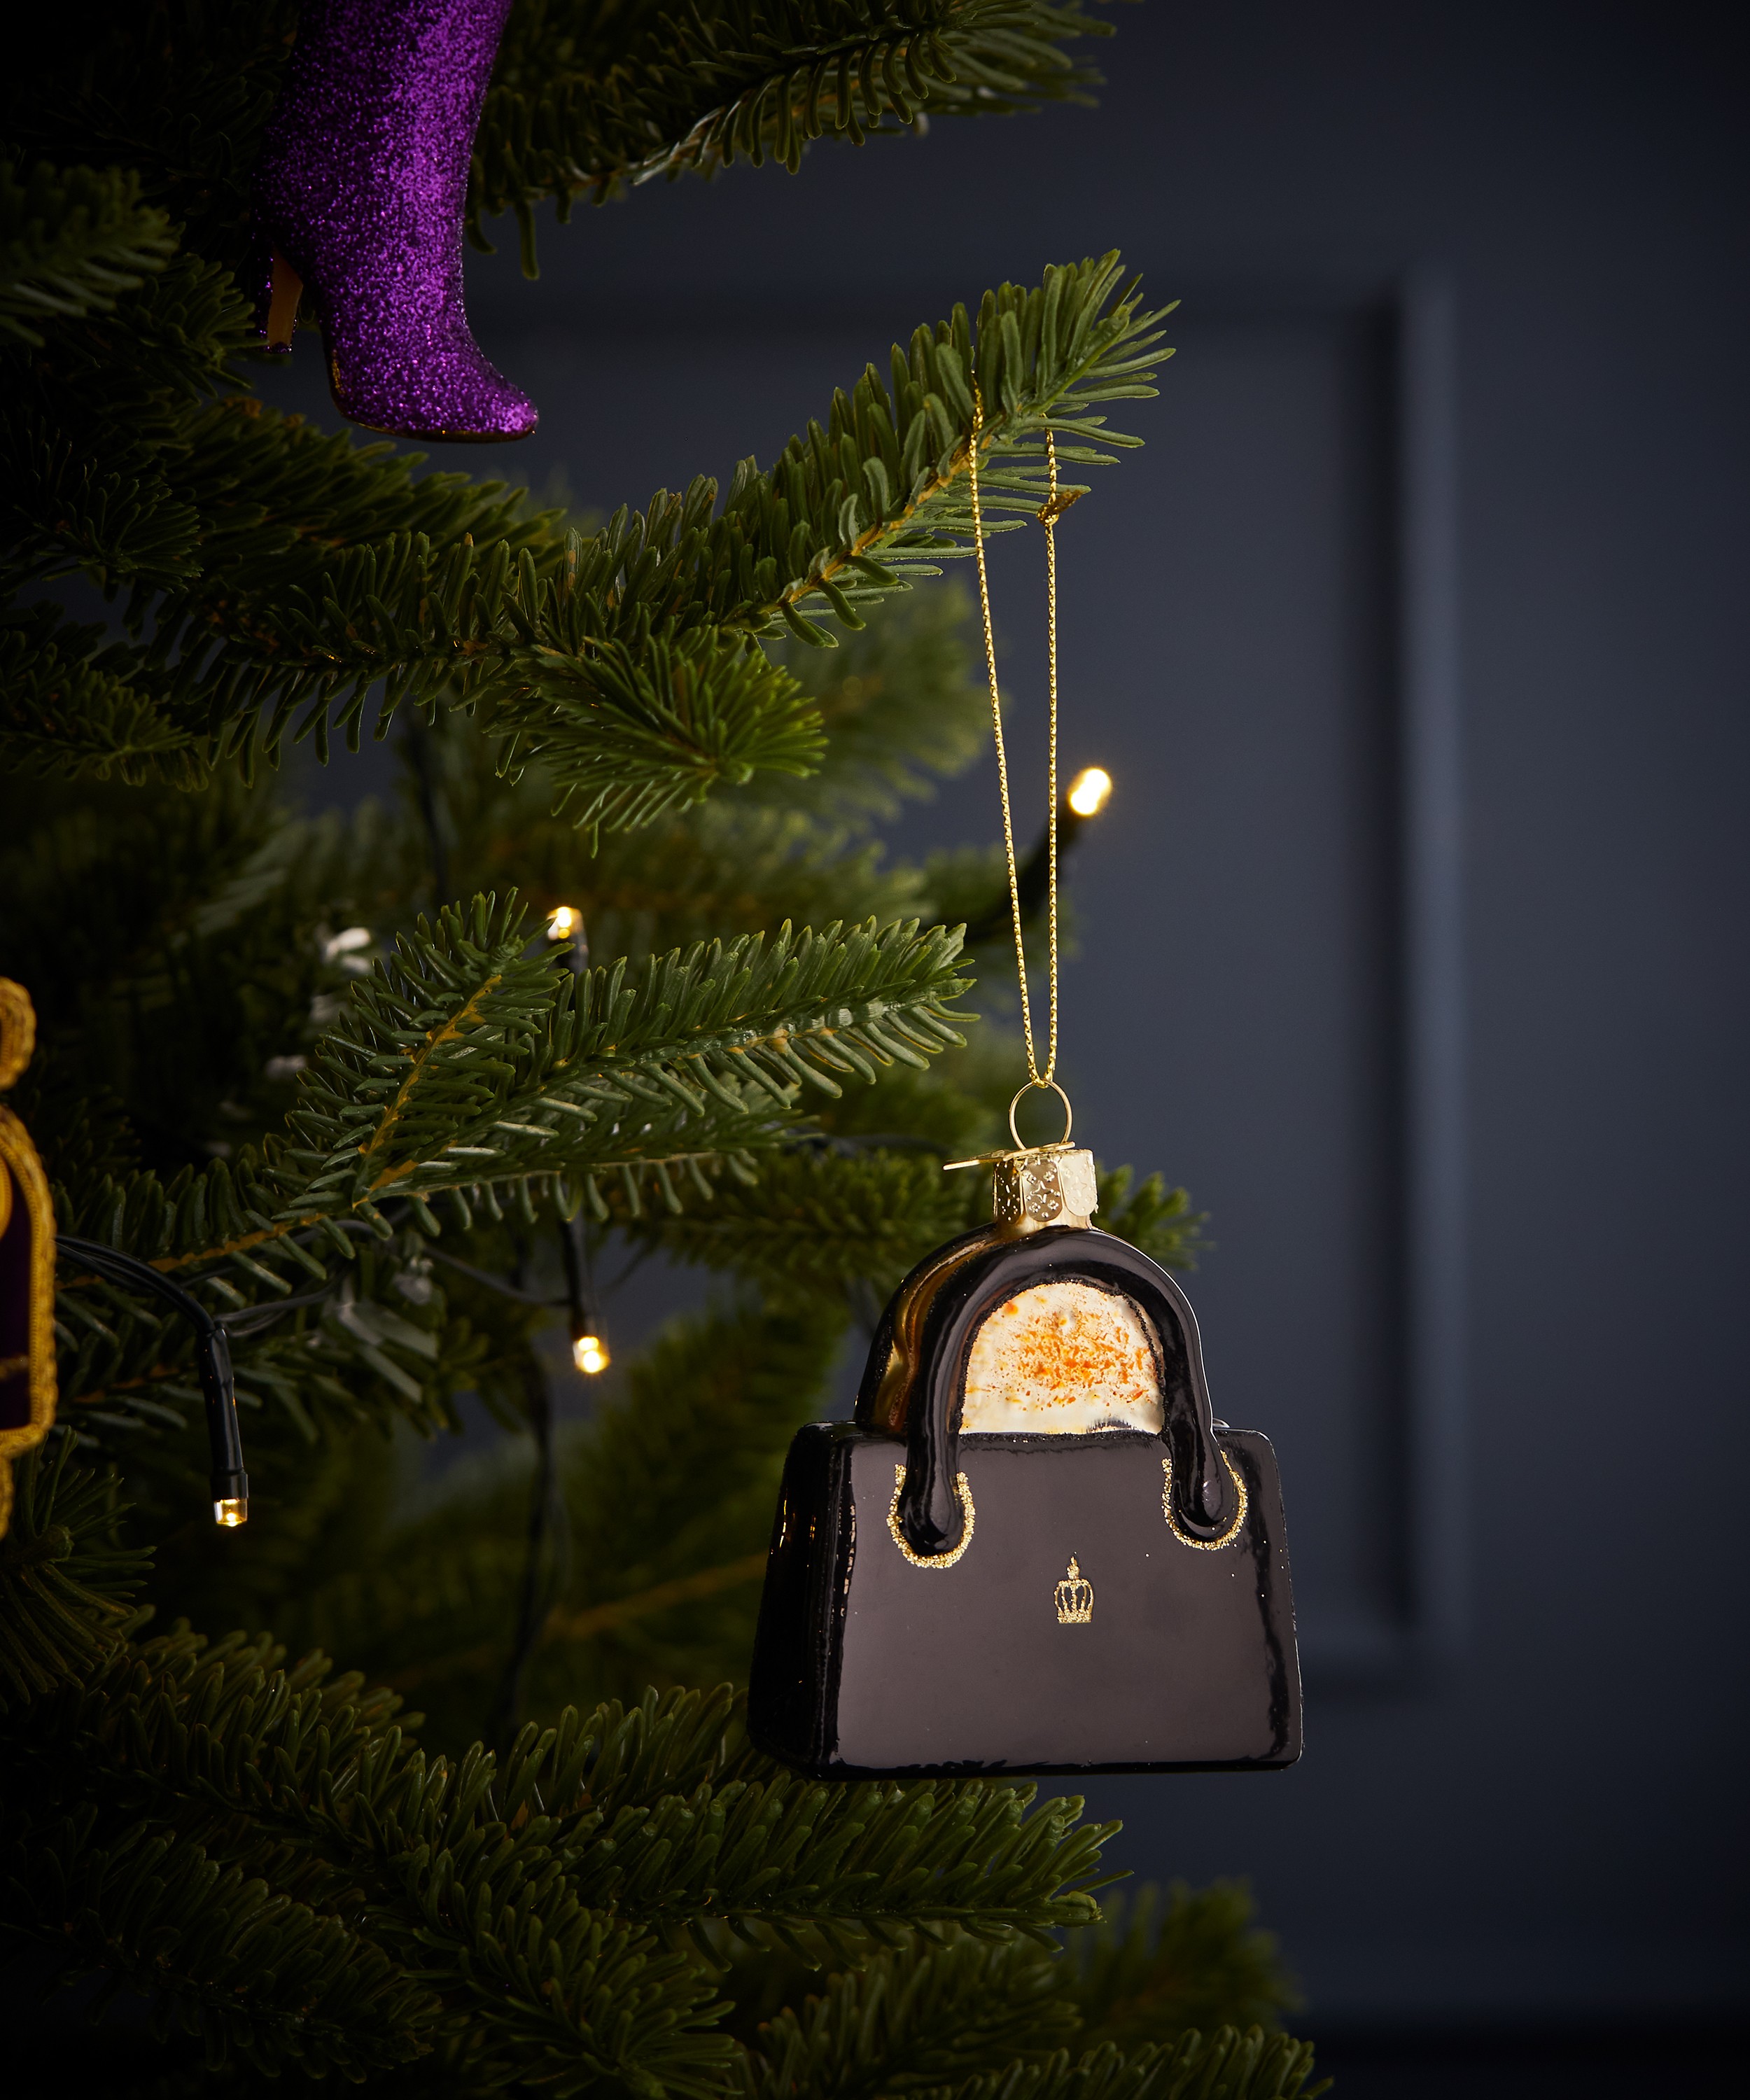 Christmas Ornaments Zip Lock Sandwich Bags